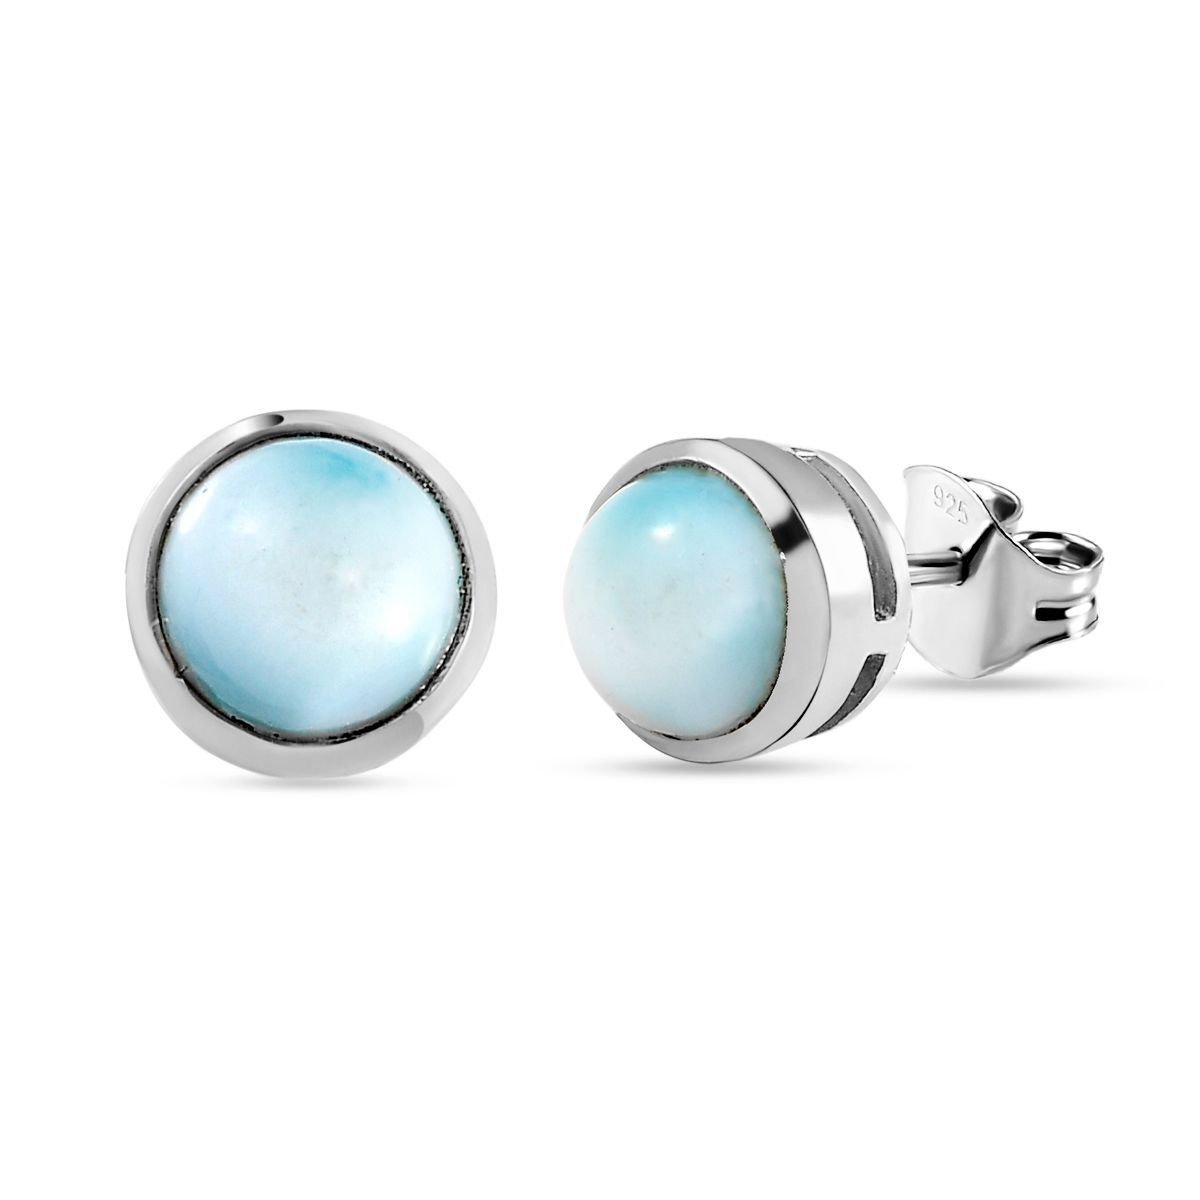 Designer Fancy Blue Dyed Sapphire Sterling Silver Overlay 15 Grams Earring 2 Long